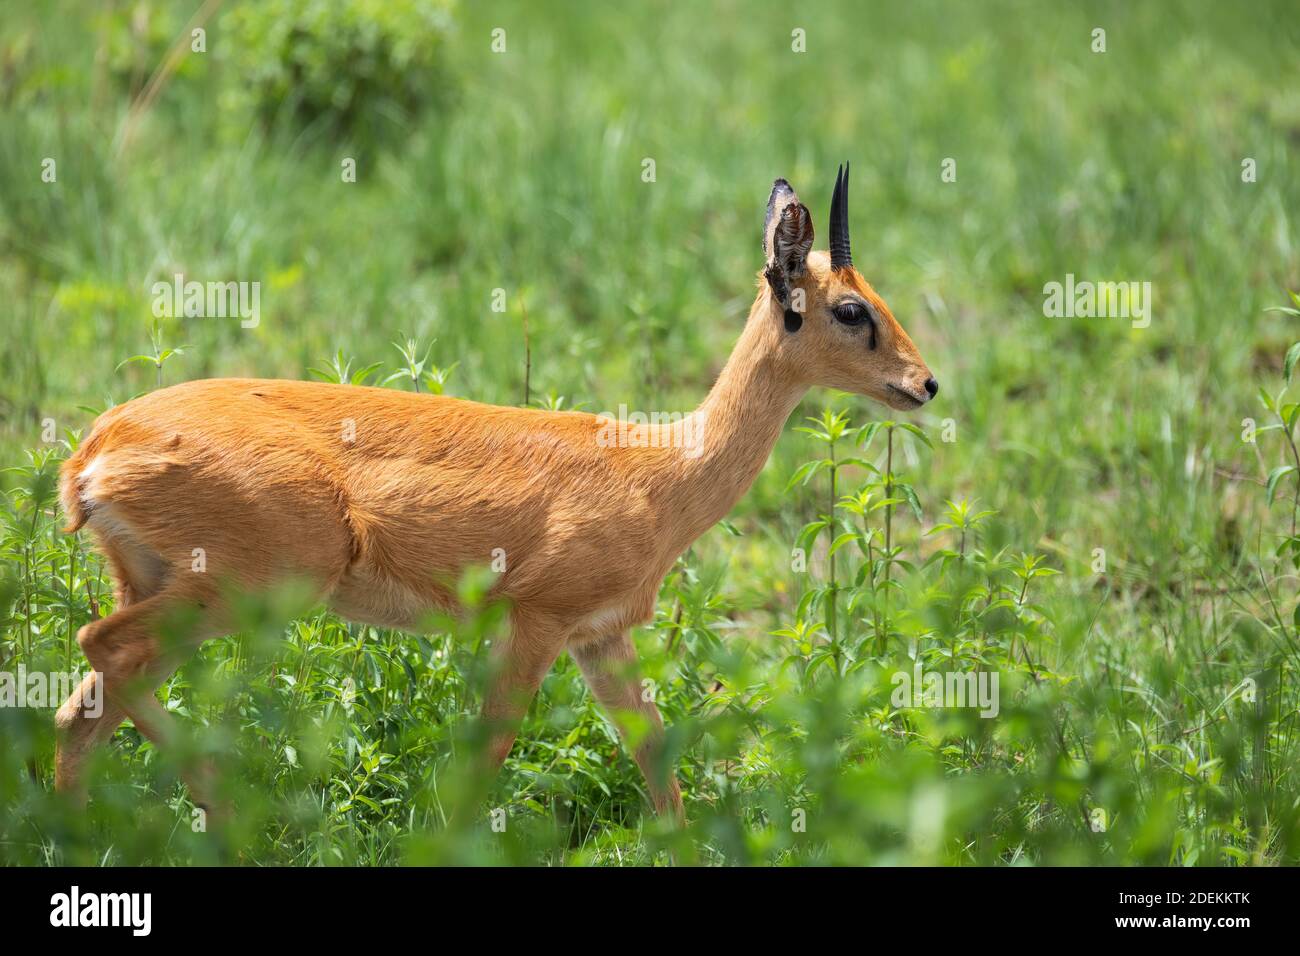 Oribi, Ourebia ourebi is cute small antelope found in eastern, southern and western Africa. Ethiopia, Senkelle Sanctuary, Africa wildlife Stock Photo